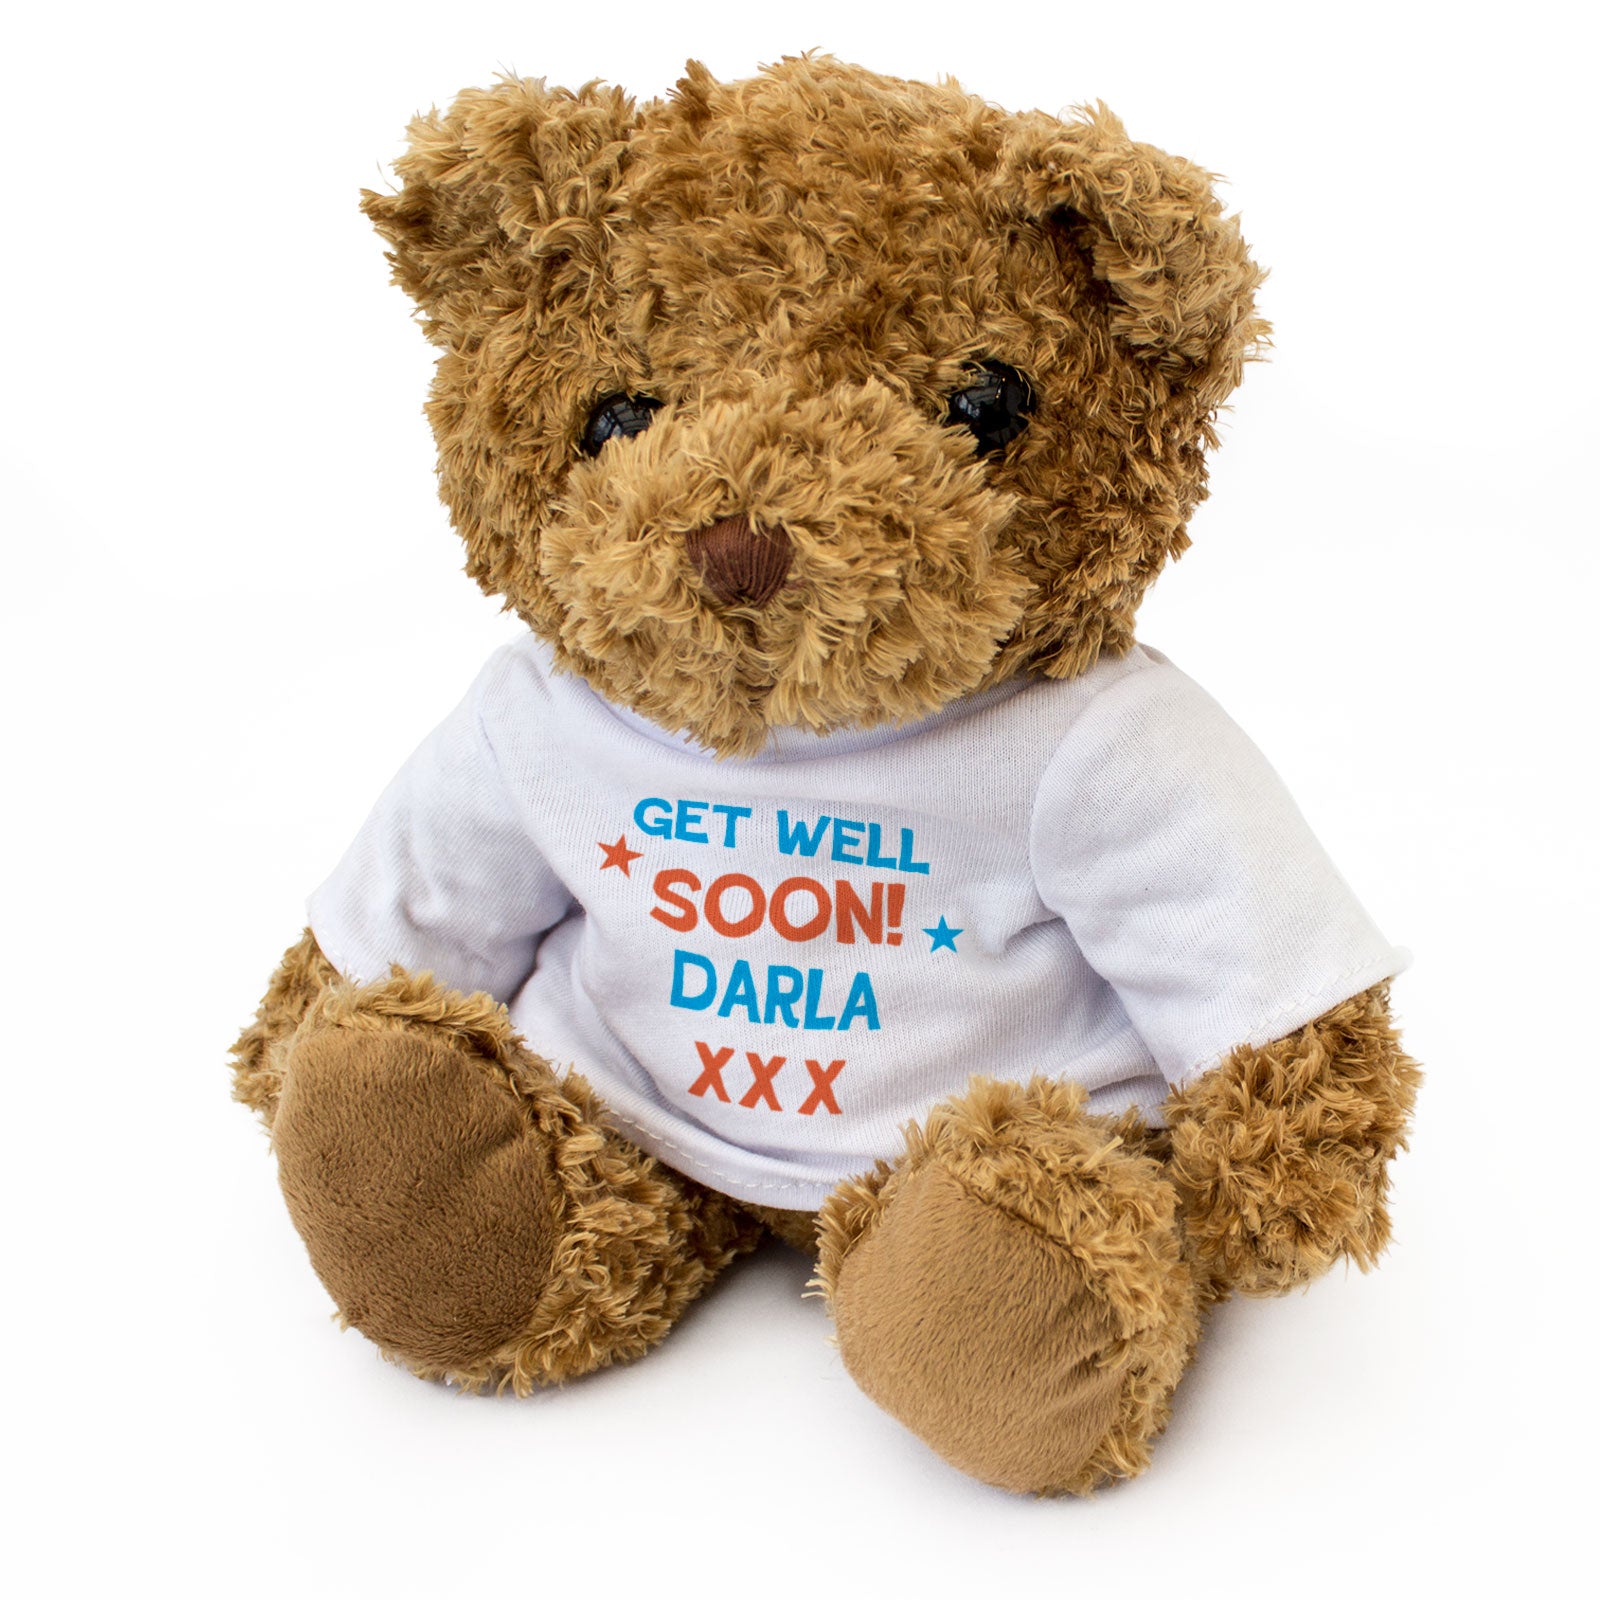 Get Well Soon Darla - Teddy Bear